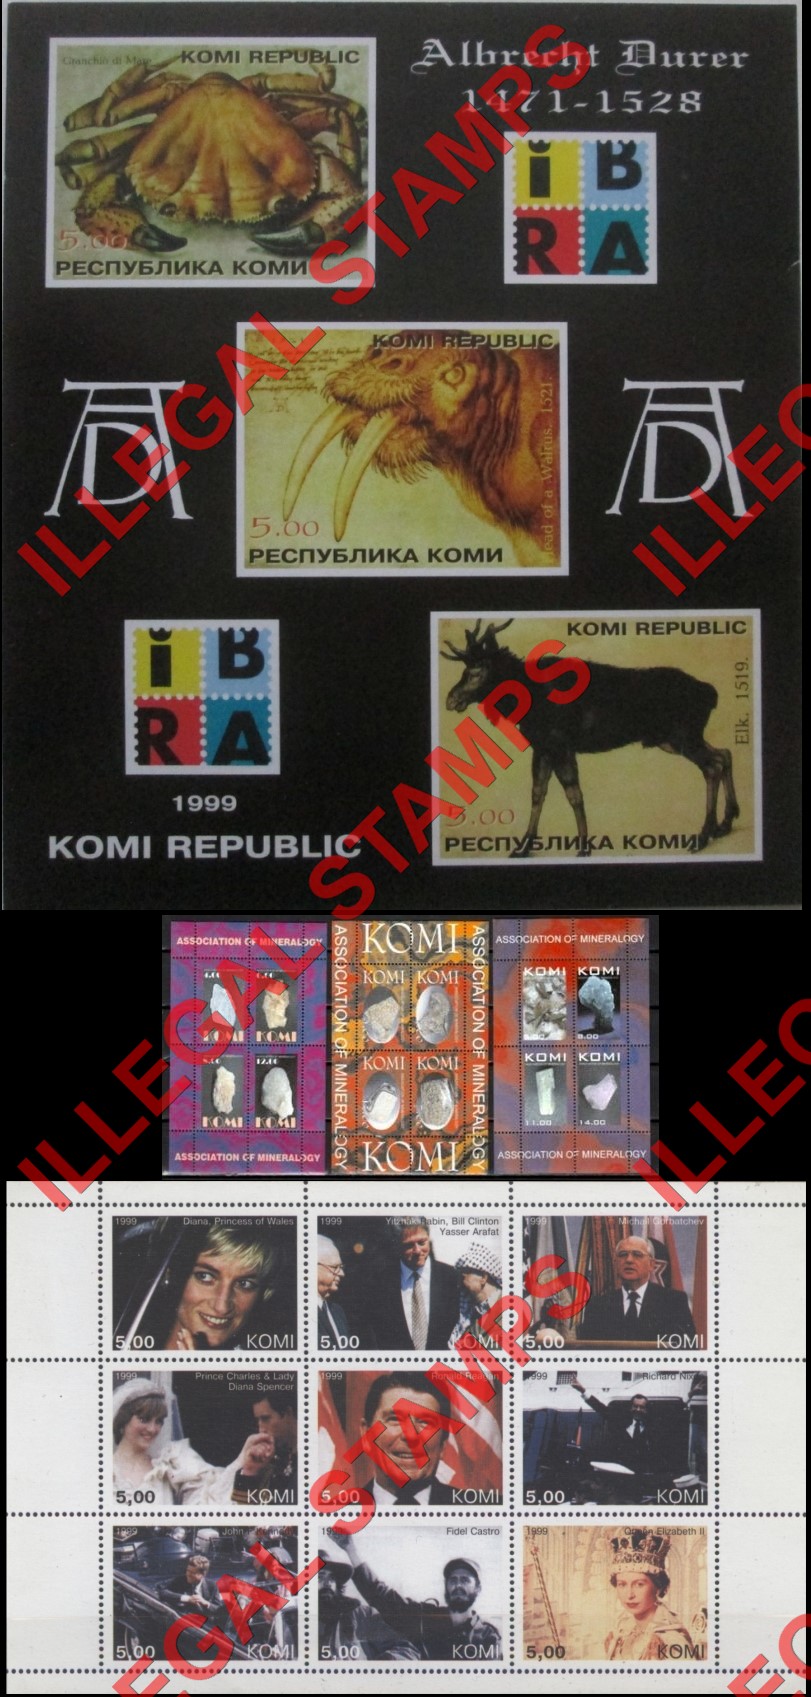 Komi Republic 1999 Counterfeit Illegal Stamps (Part 1)